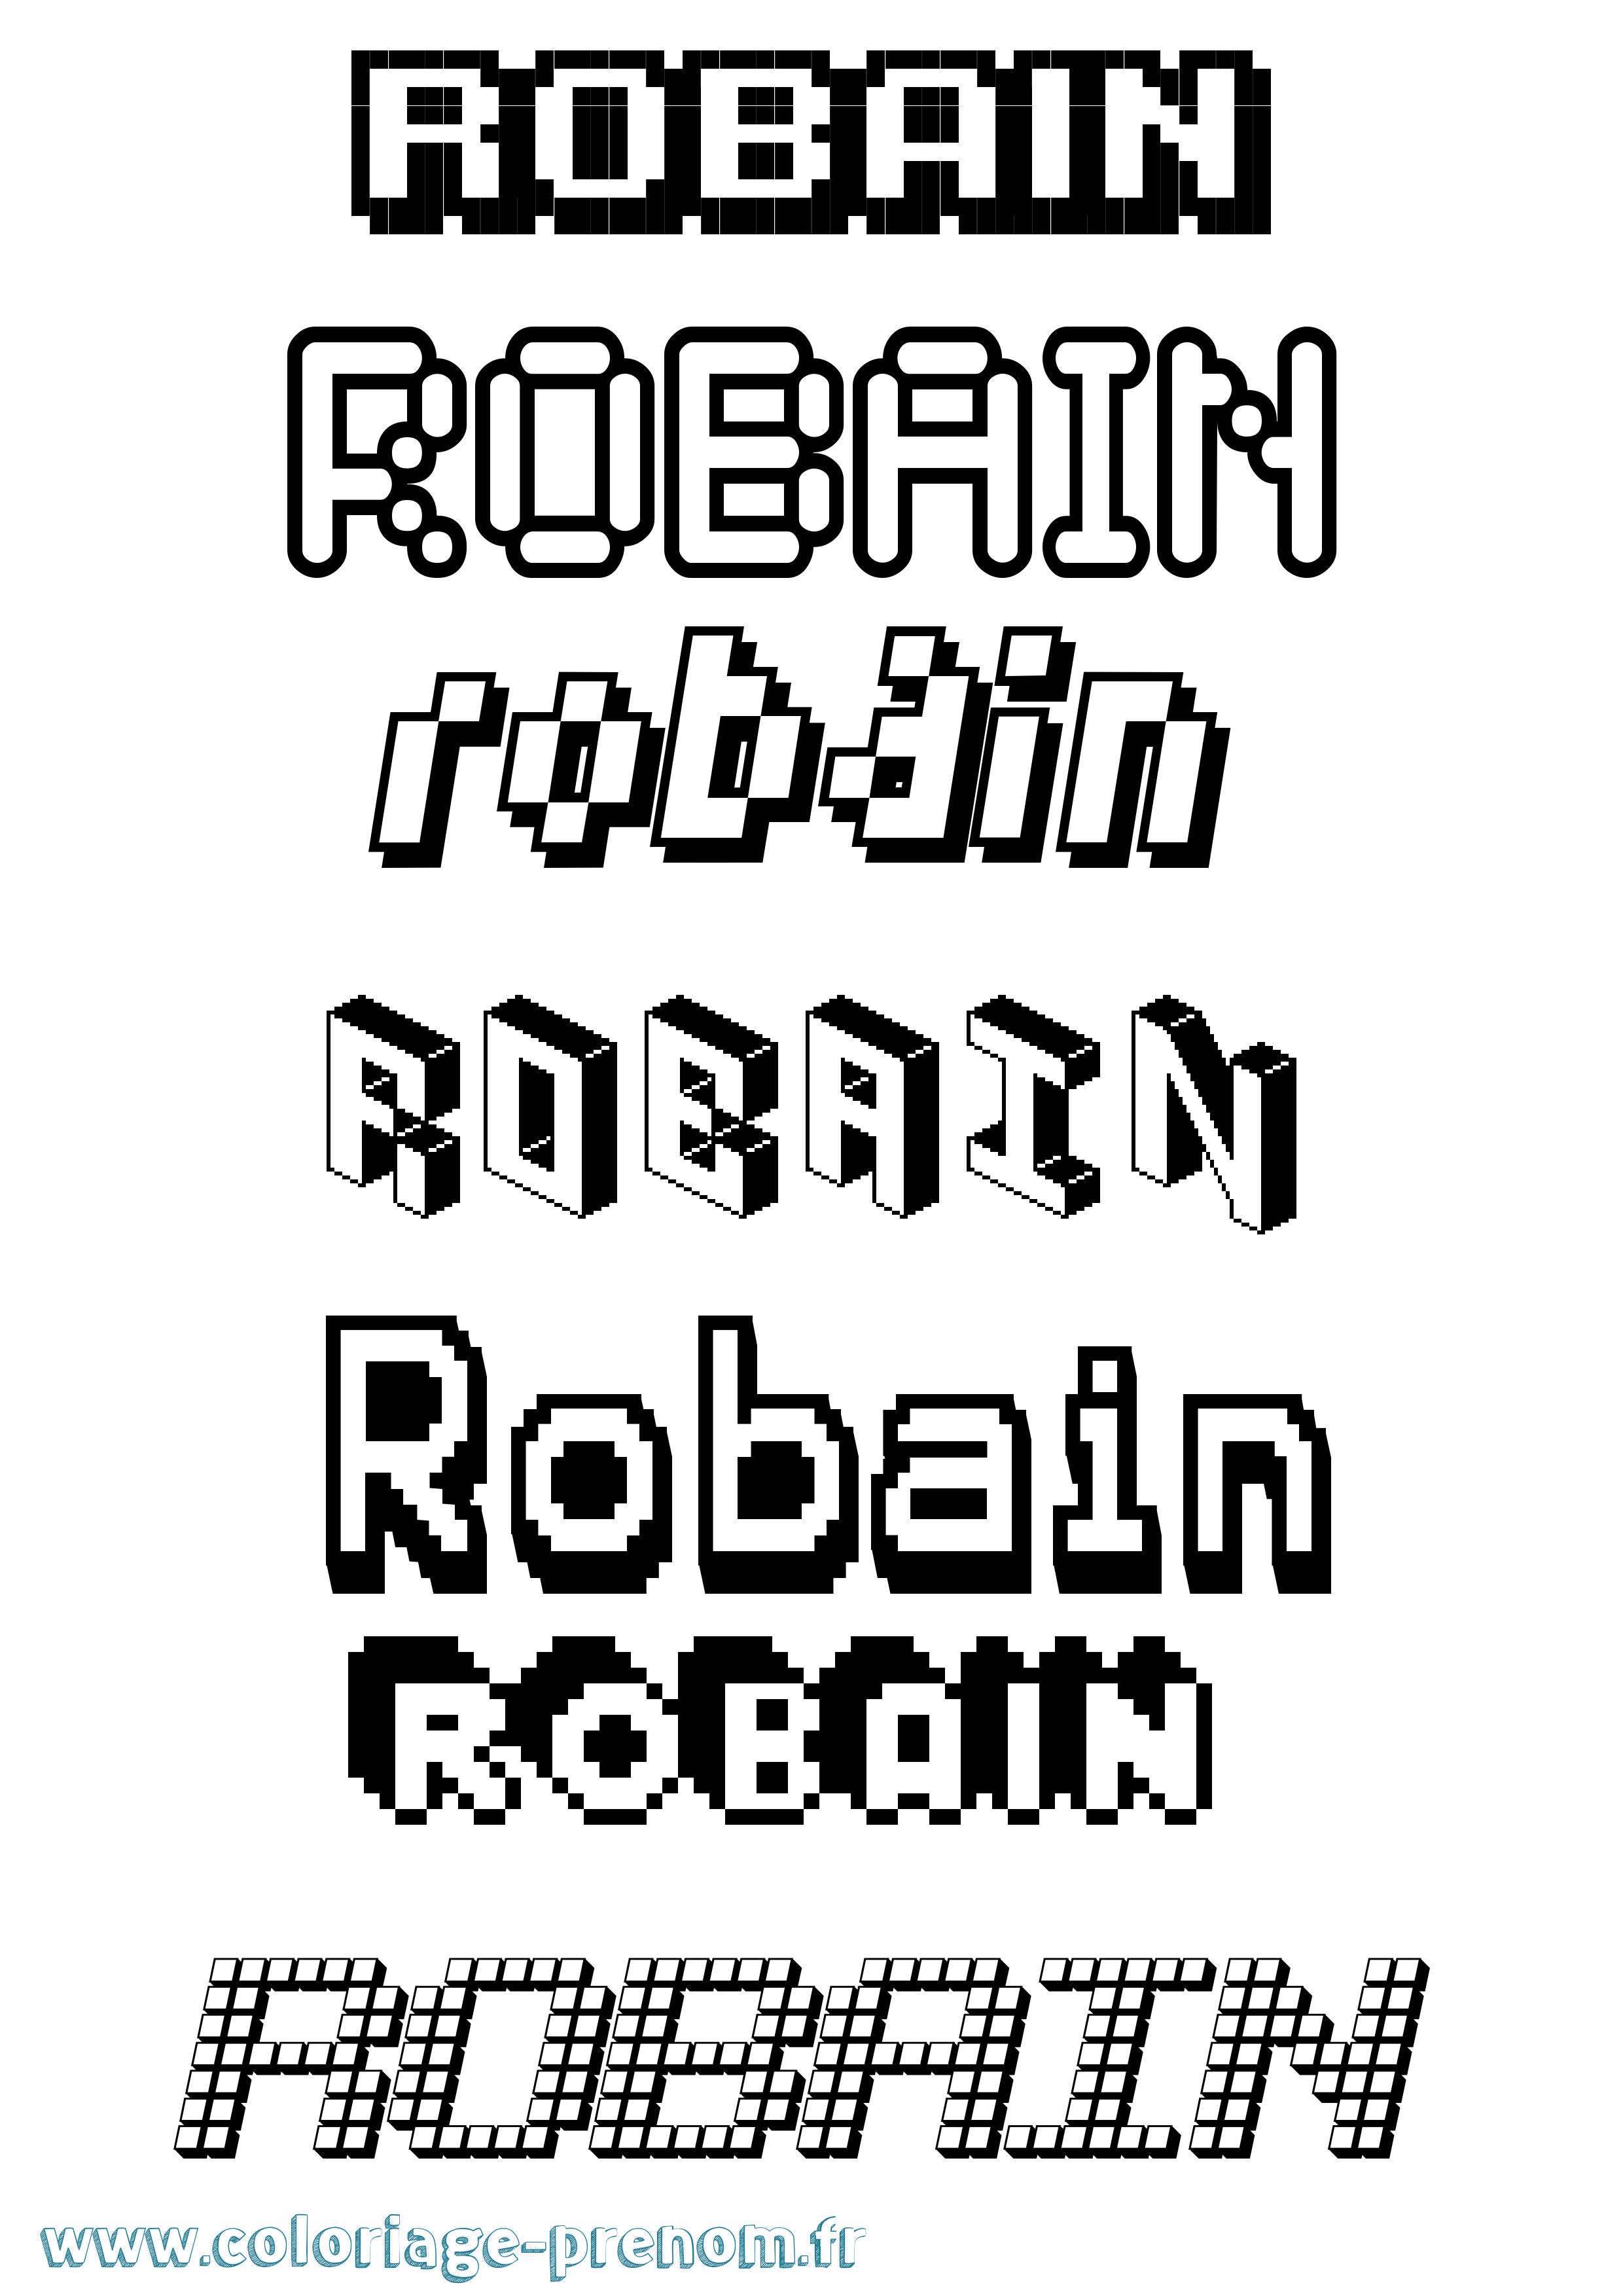 Coloriage prénom Robain Pixel